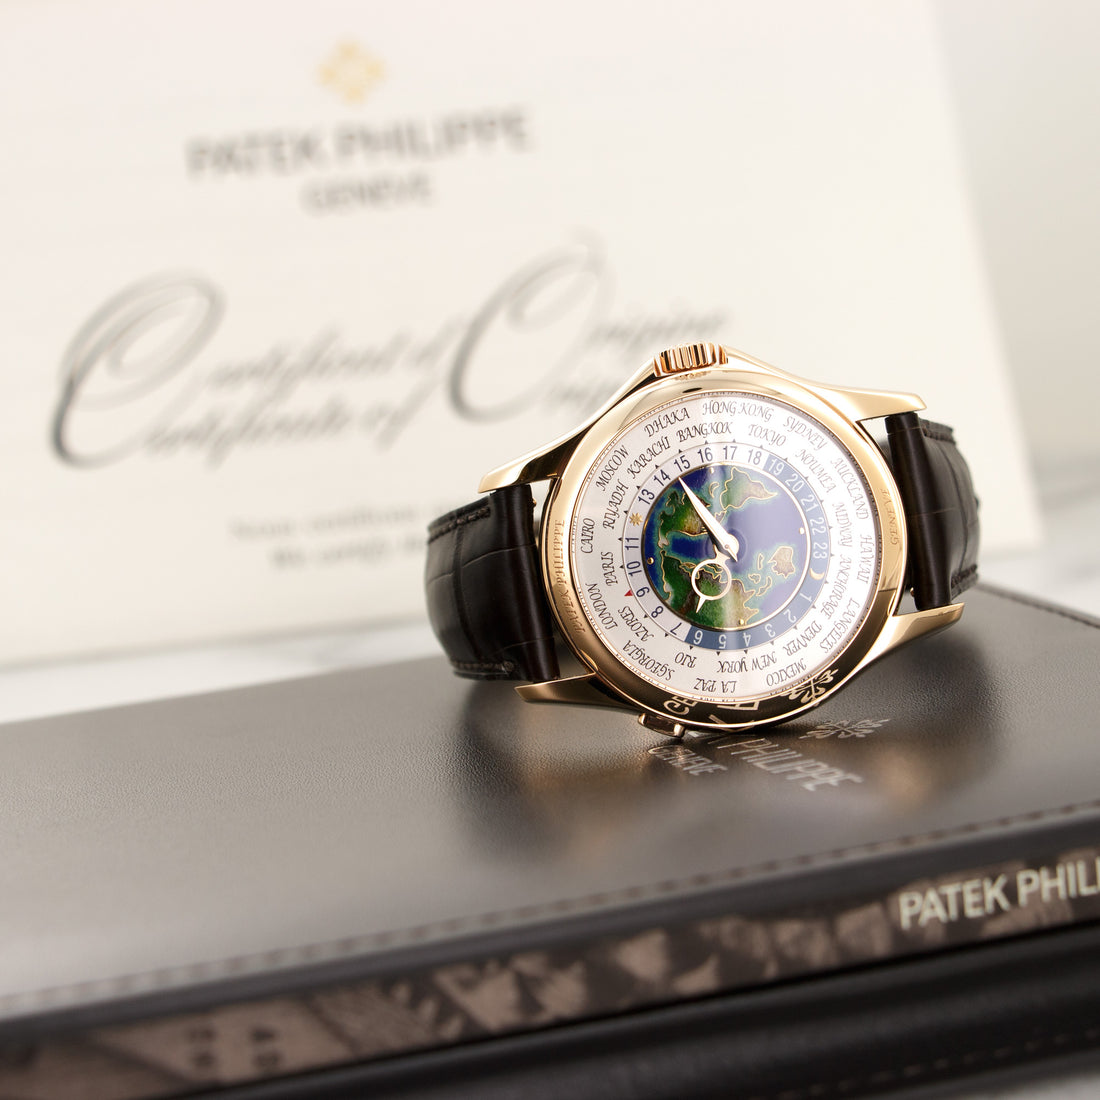 Patek Philippe Rose Gold Cloisonne World Time Ref. 5131